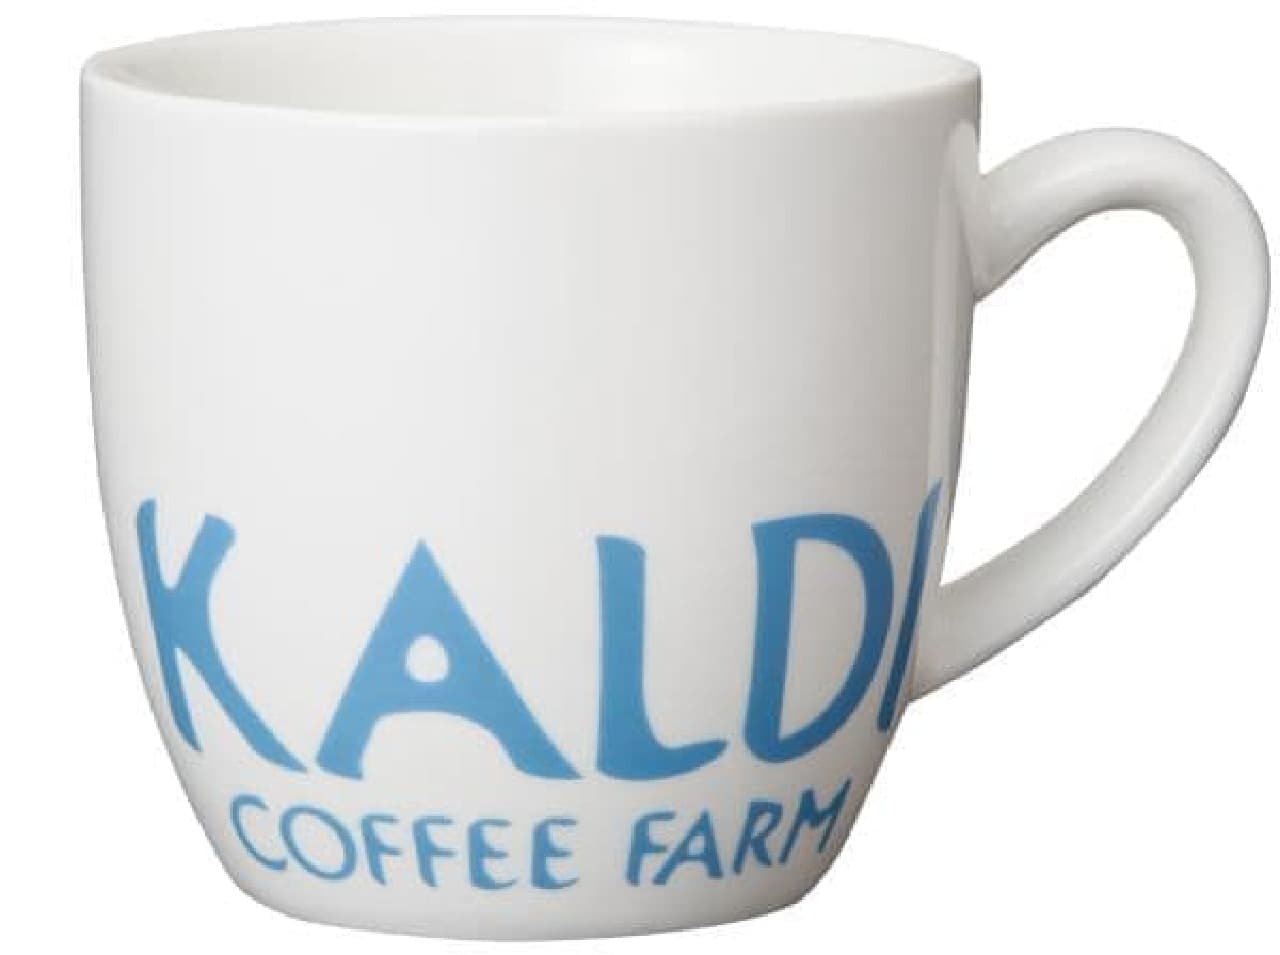 KALDI Coffee Farm "Drip Coffee Set"